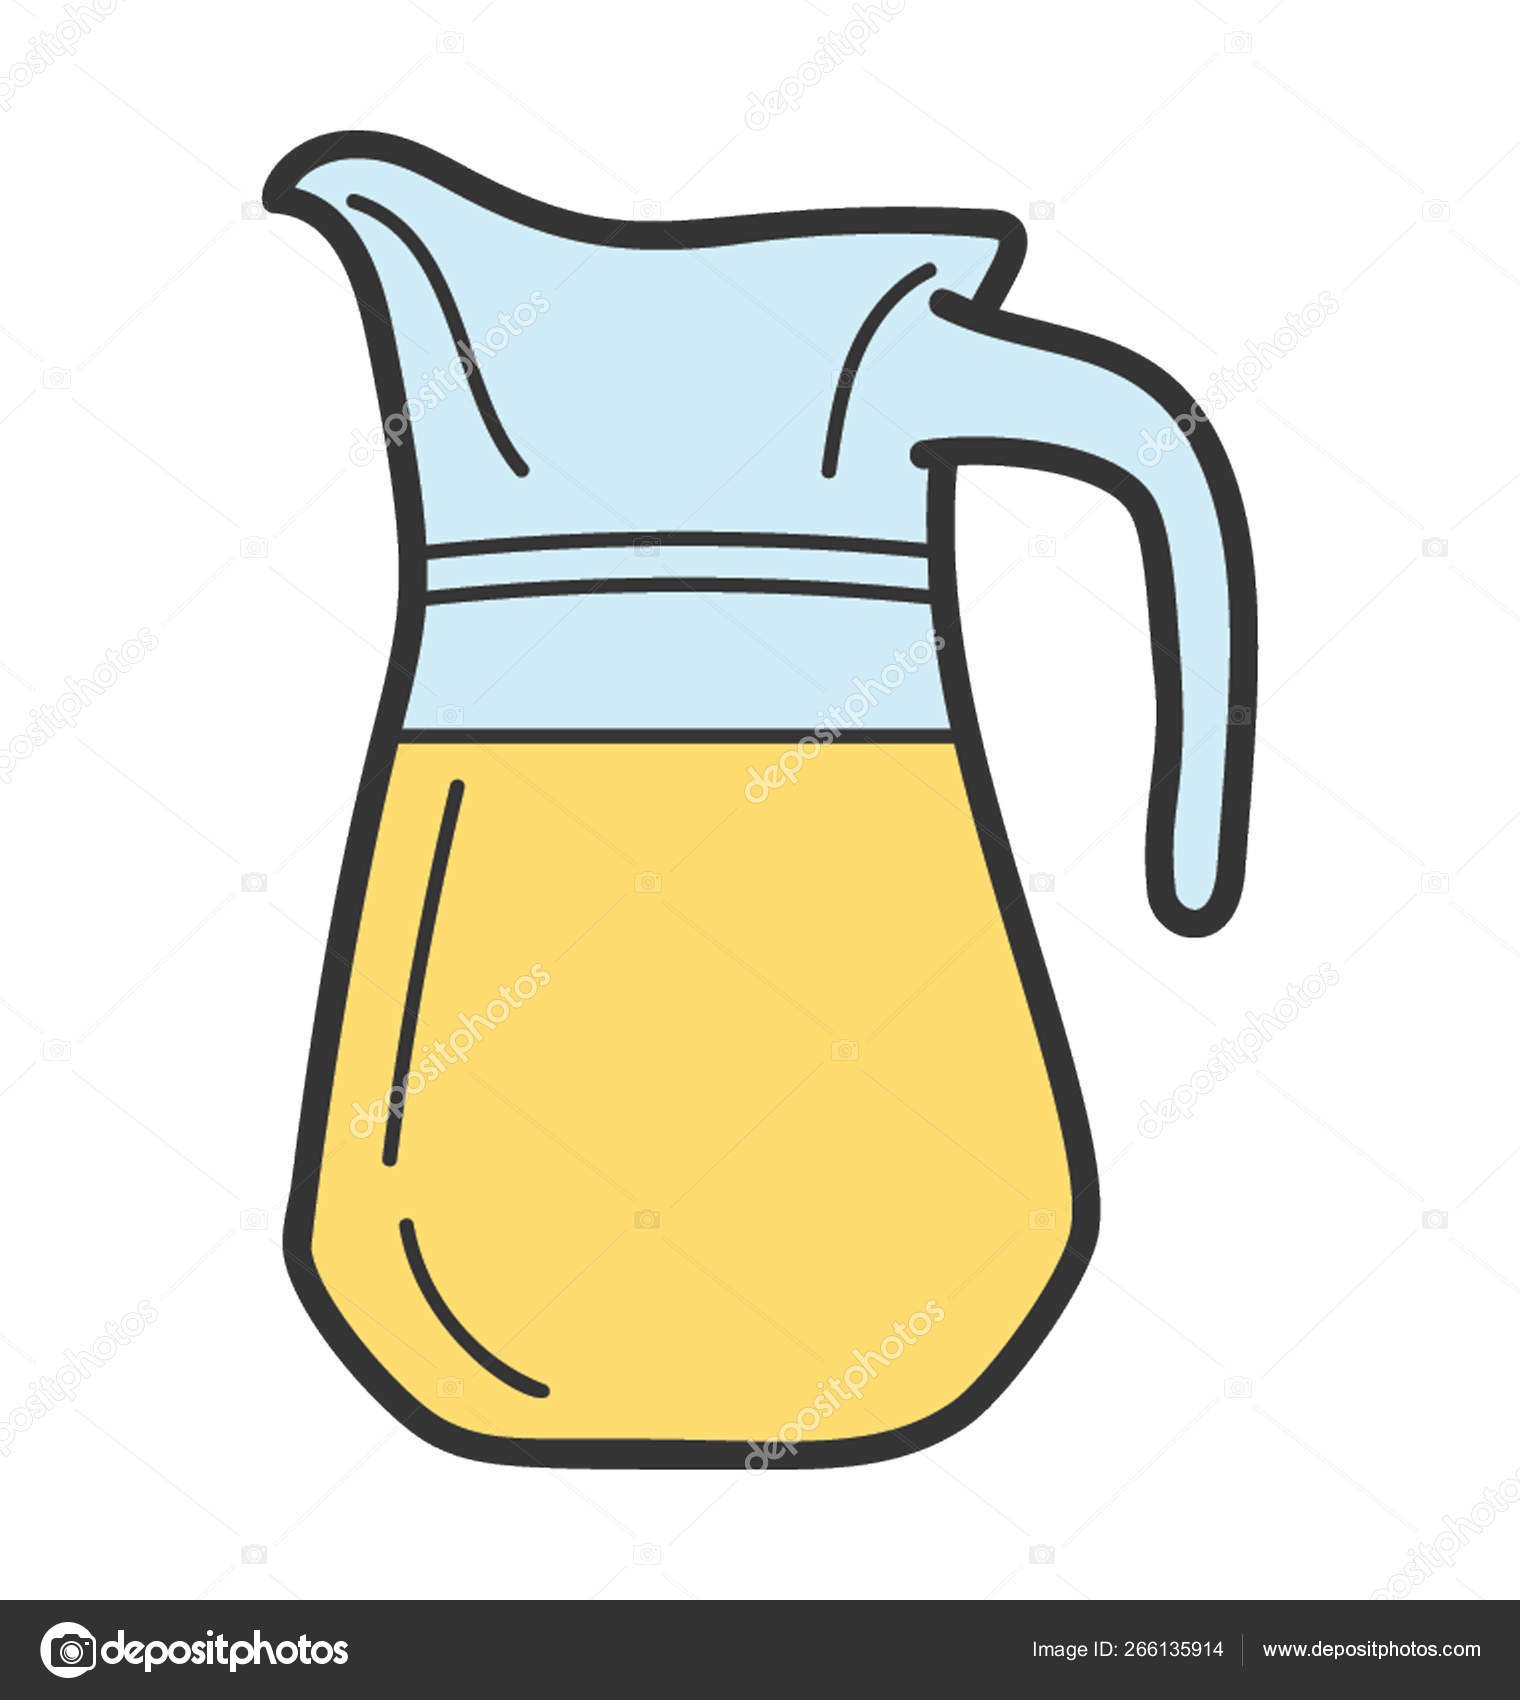 Juice jug icon in doodle design. Stock Vector Image by ©vectorspoint  #266135914